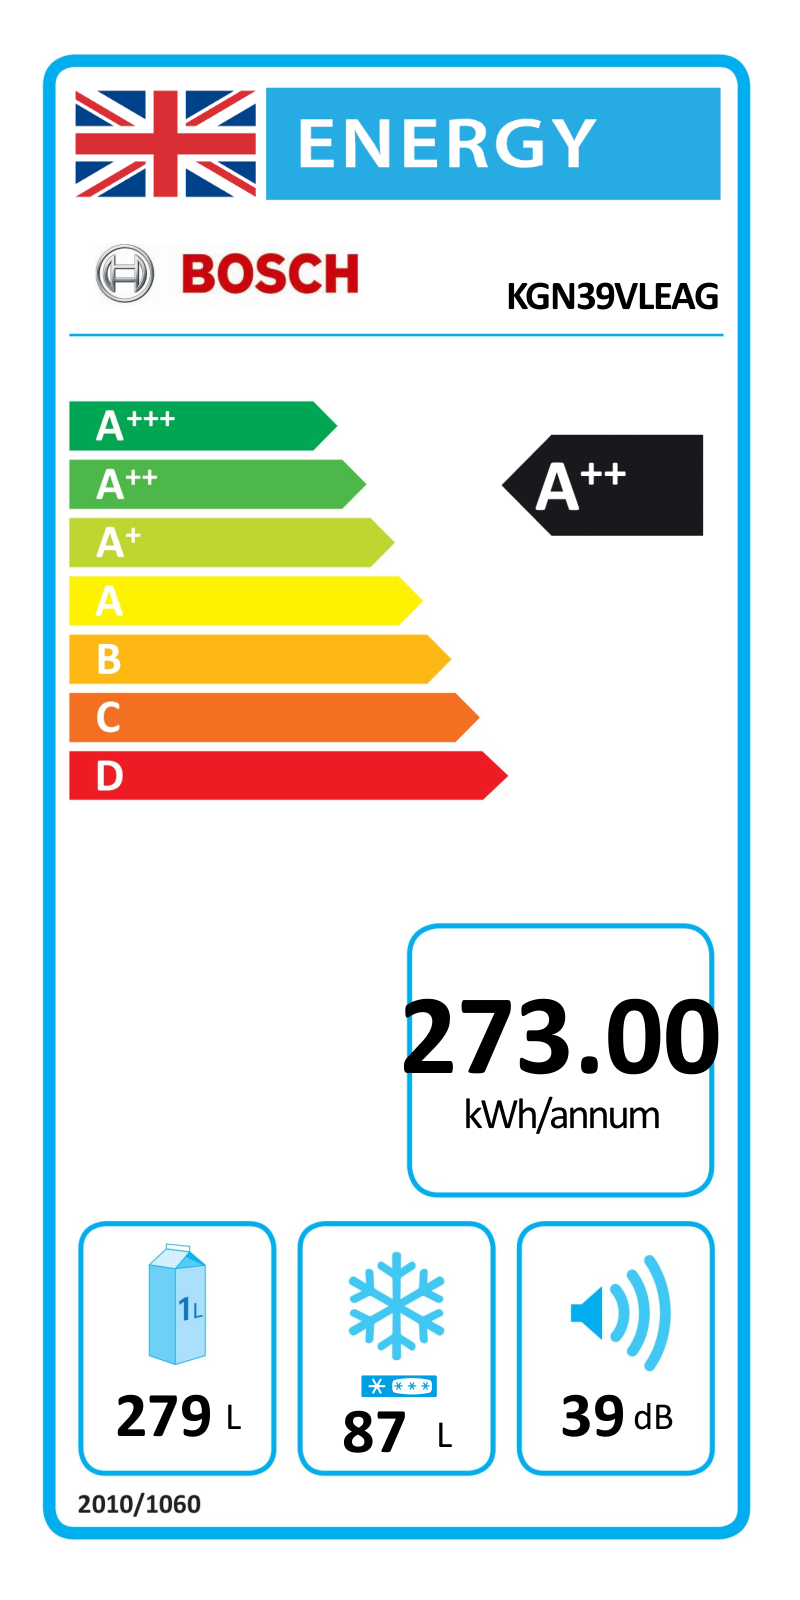 Bosch KGN39VLEAG EU Energy Label